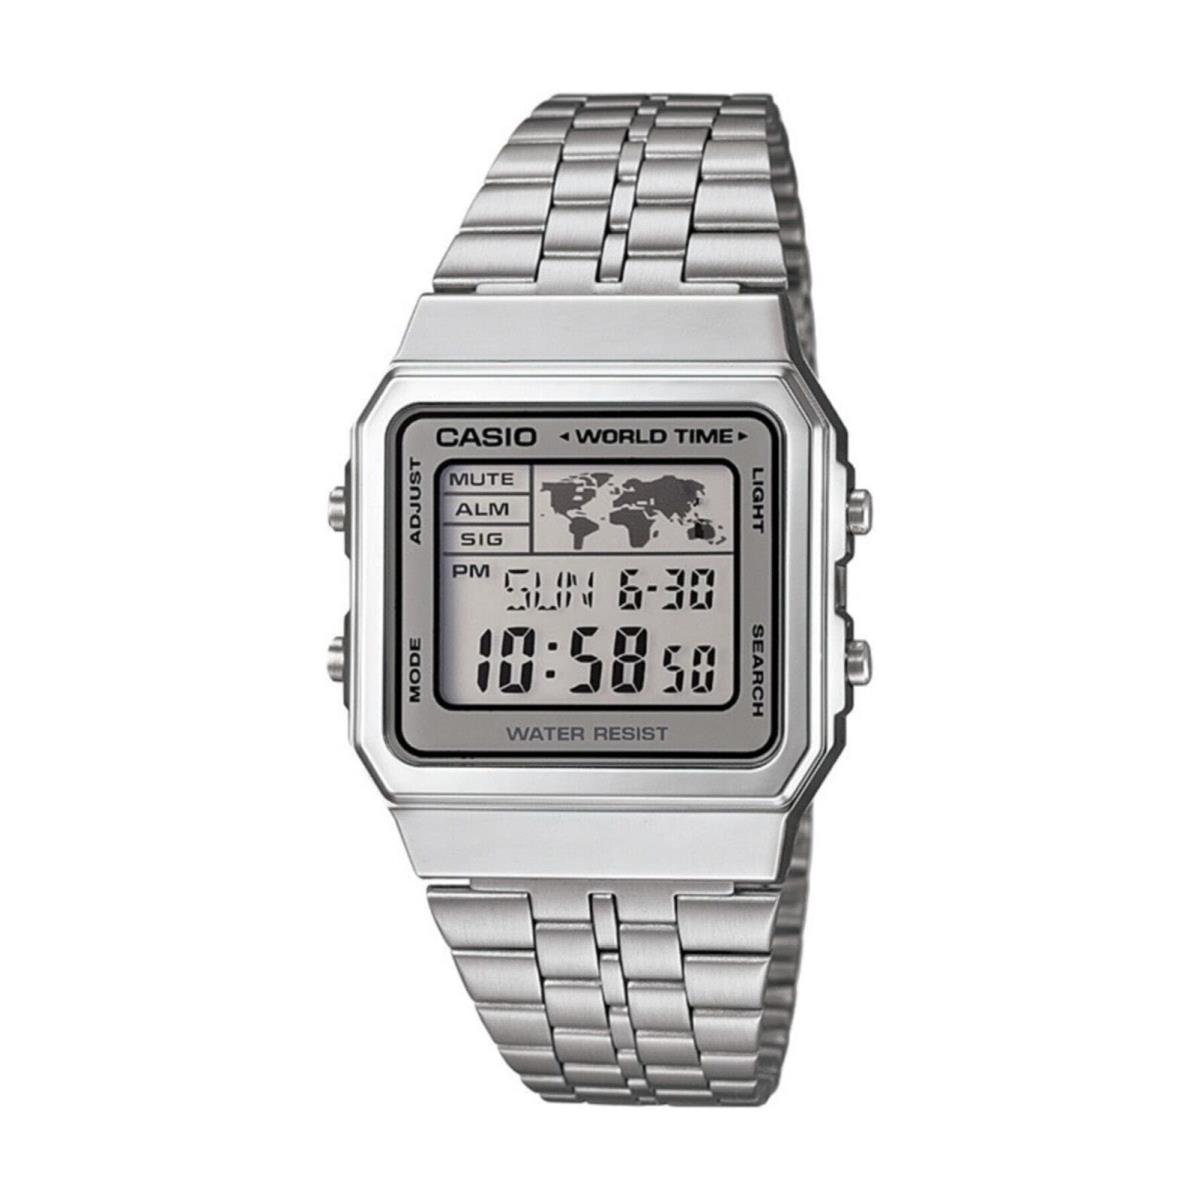 Casio - A500WA-7D - Vintage - World Time Watch - Digital Quartz - Lcd Dial